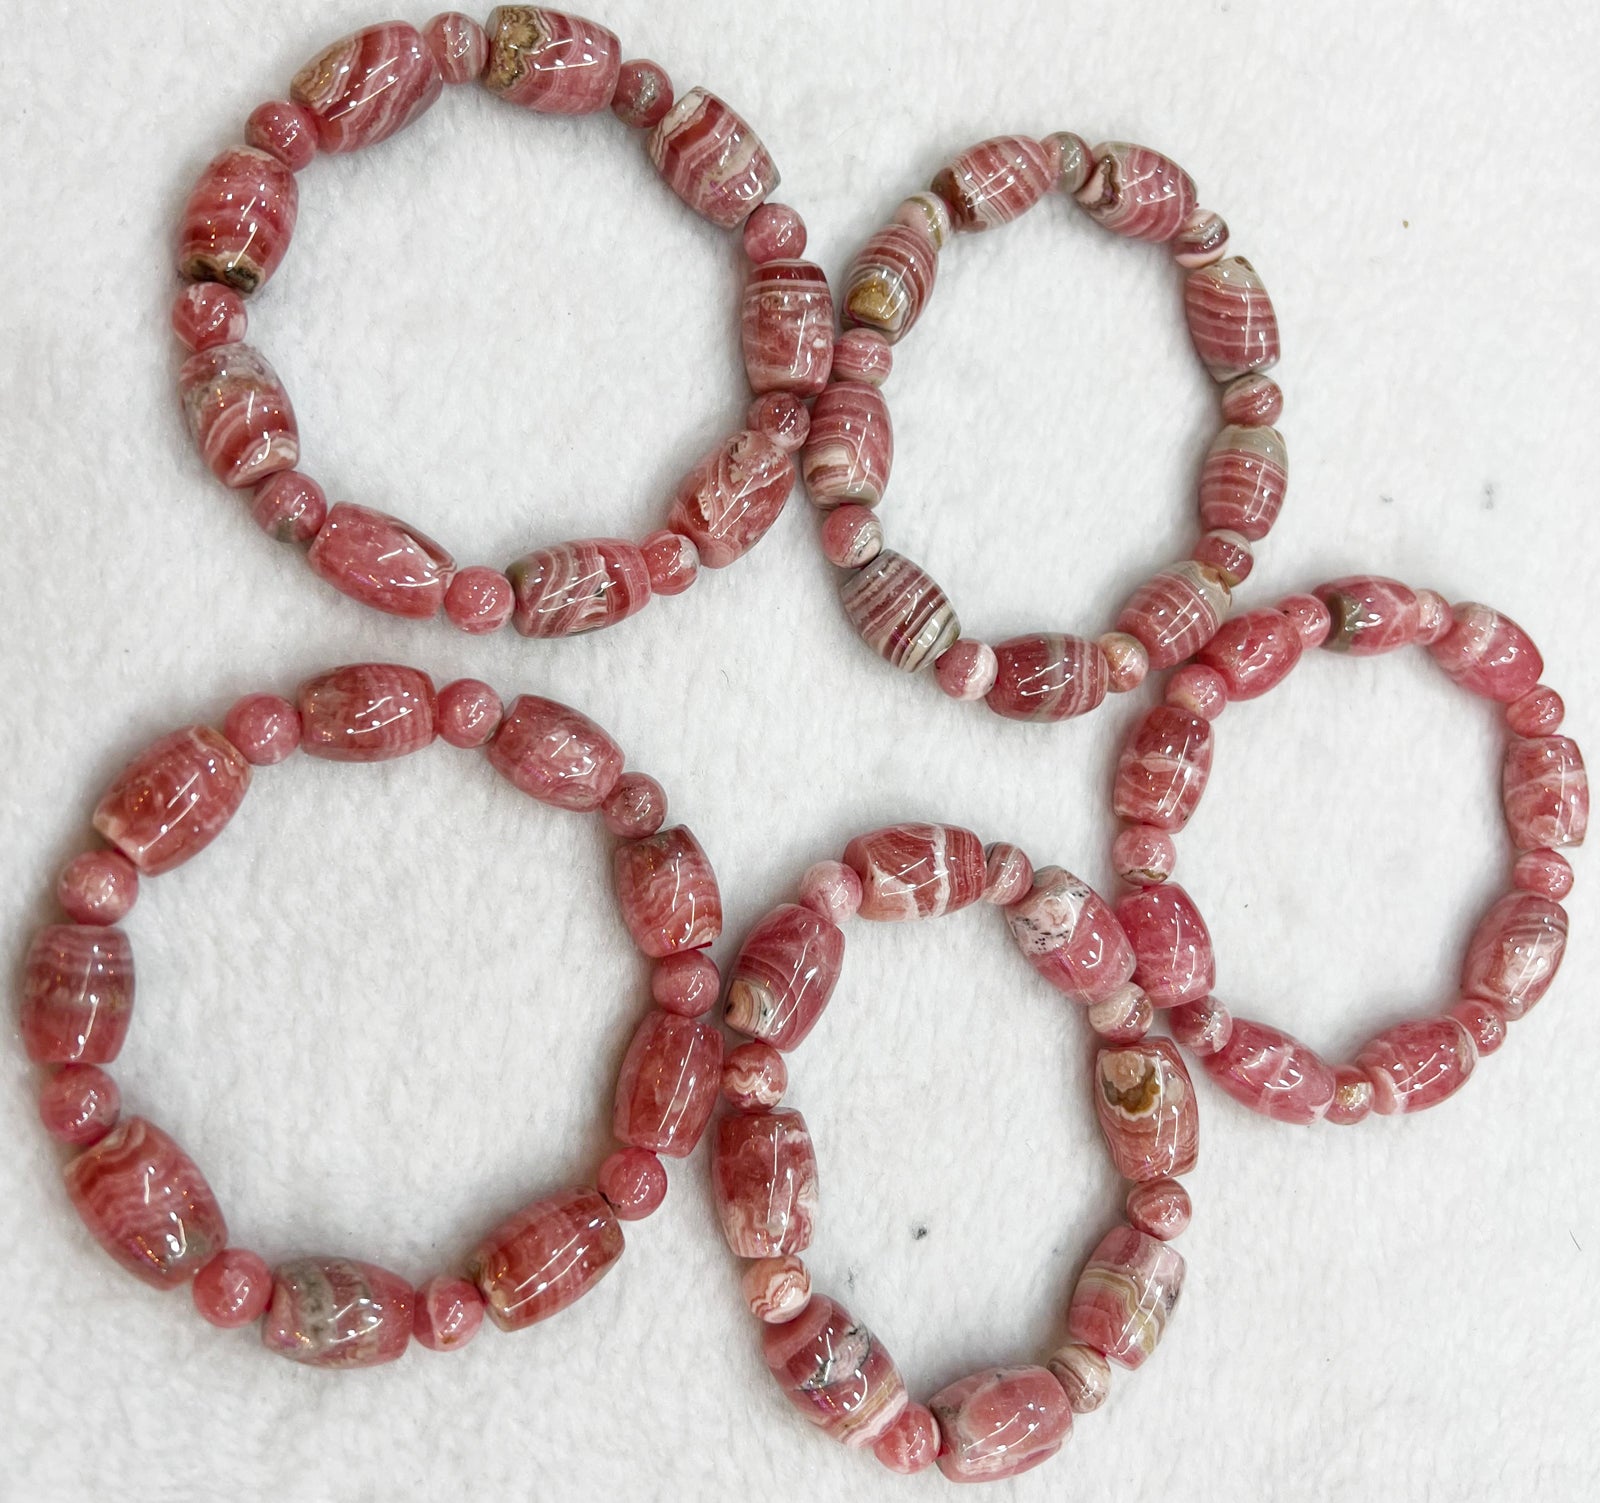 Bracelet of natural stone beads rhodachrosite attracting stones